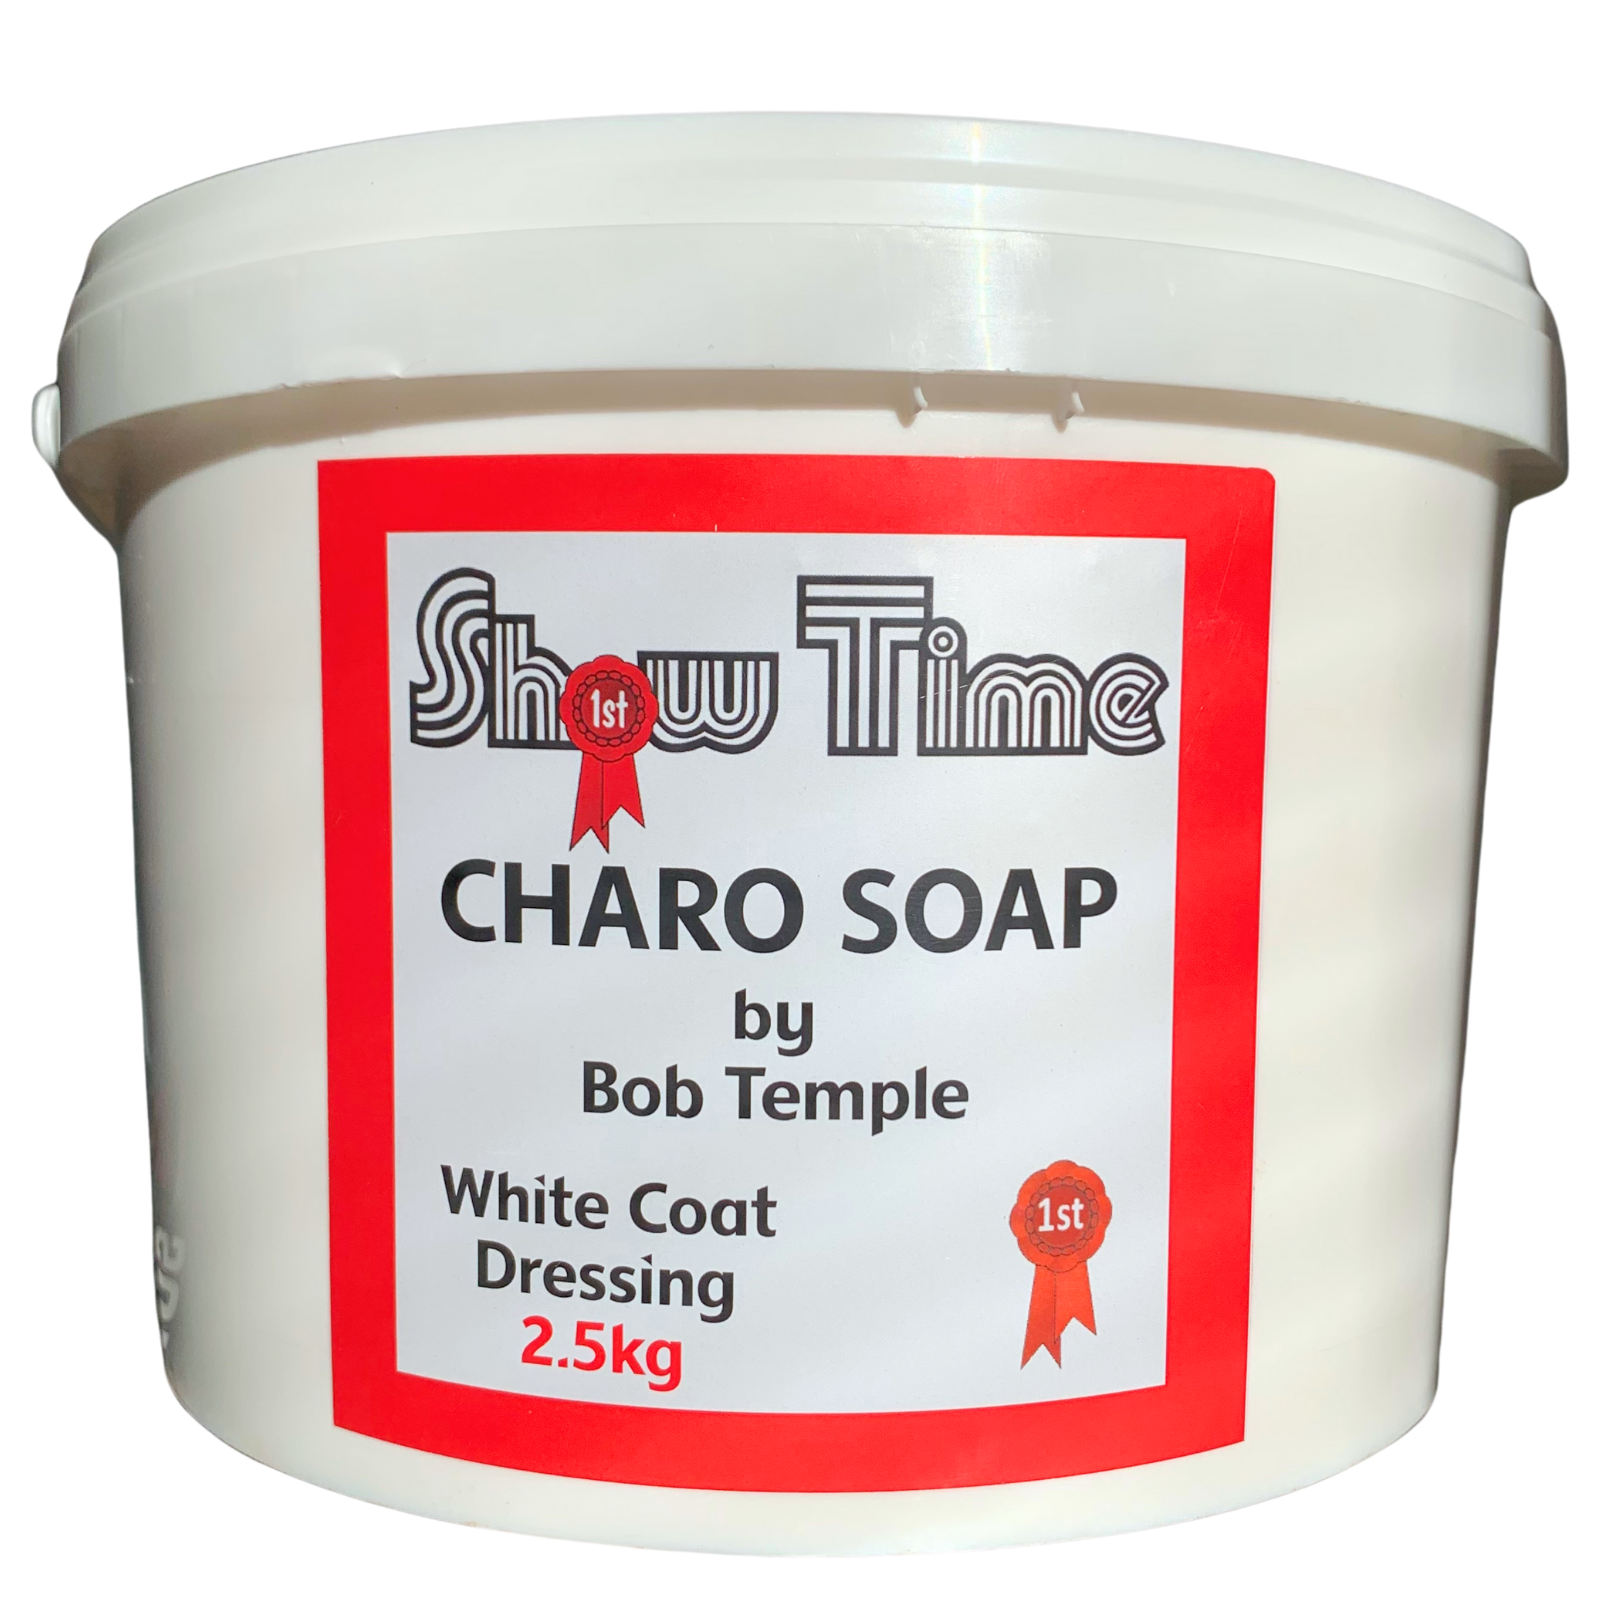 ShowTime Charo Soap